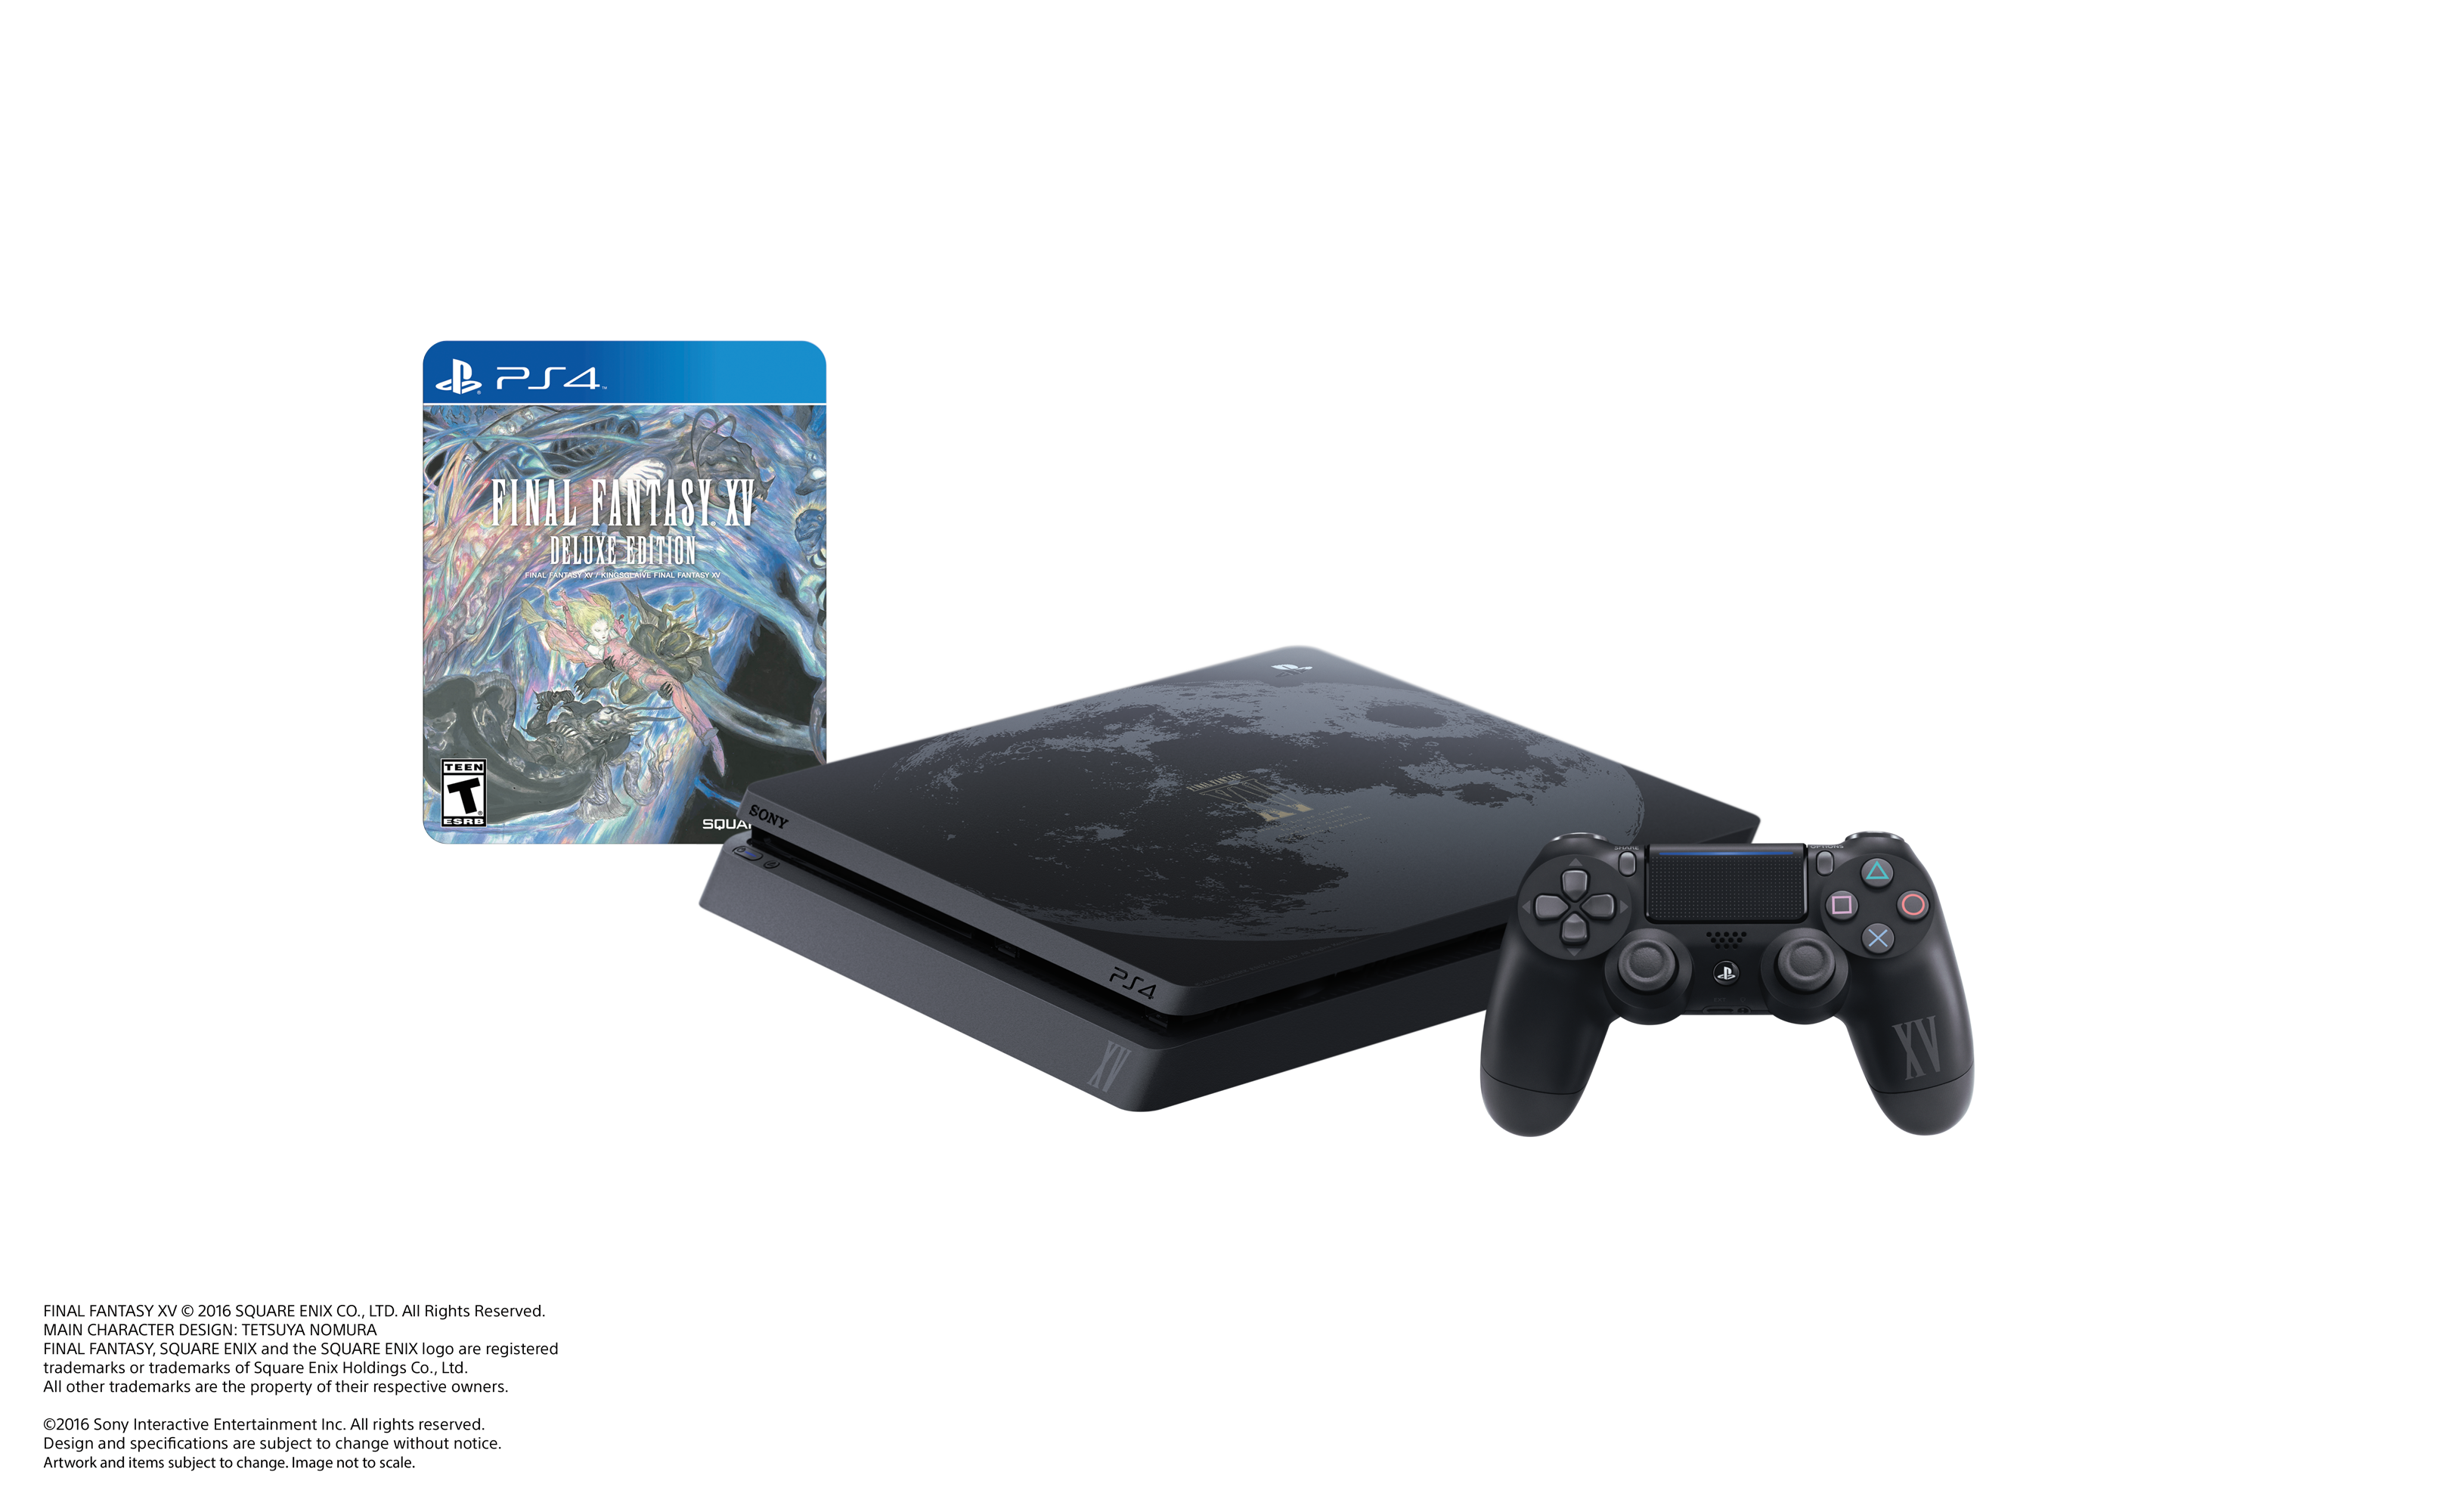 PS4 Final Fantasy XV Luna Edition model announced for Japan 